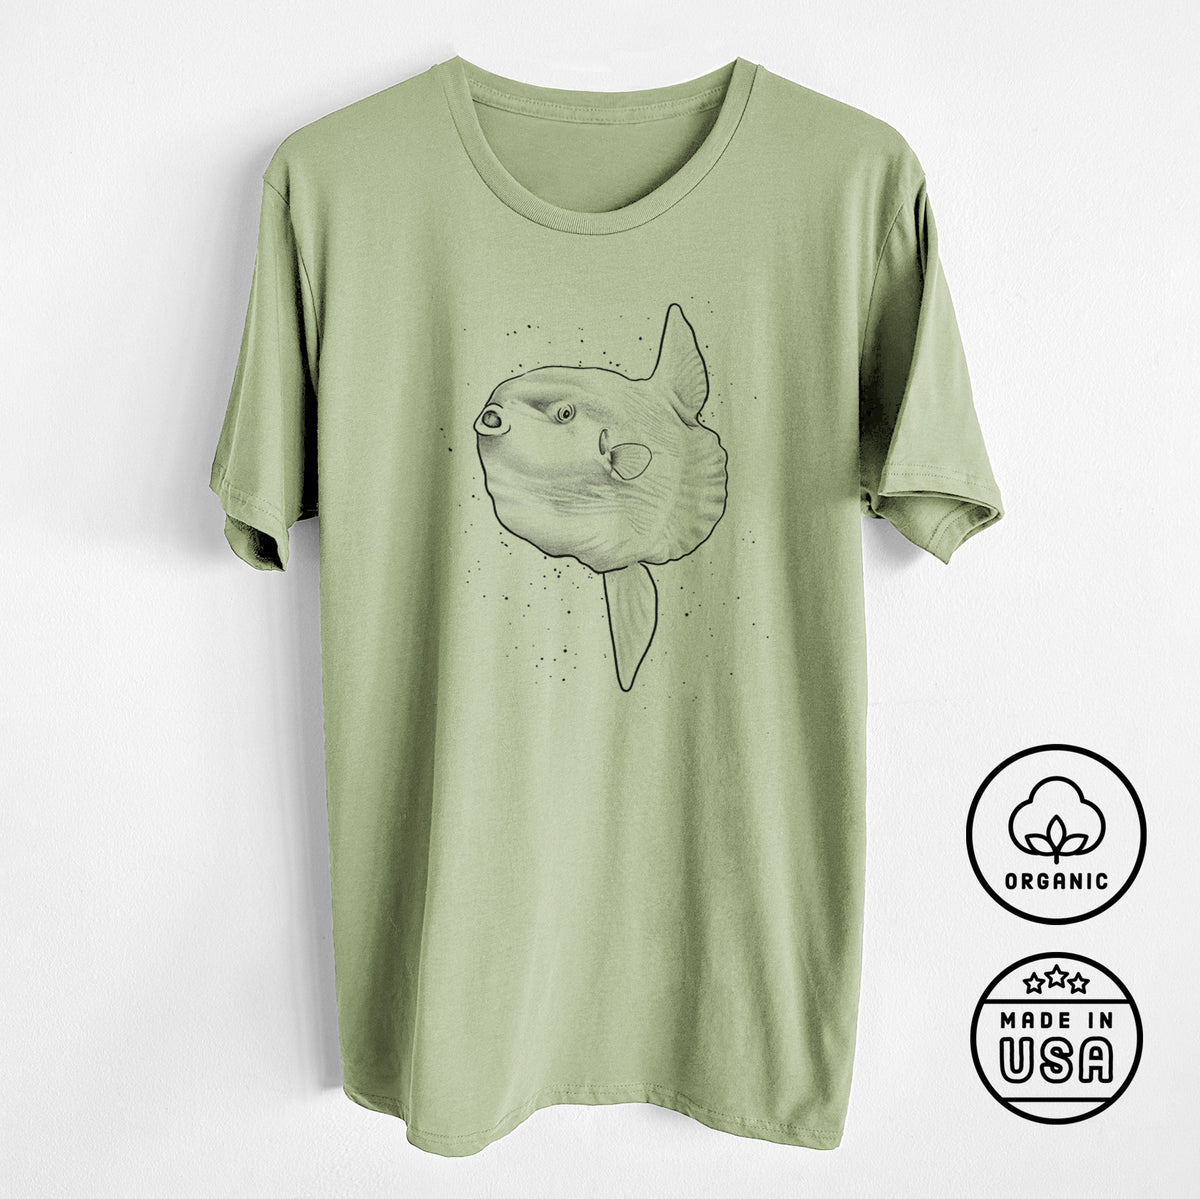 Ocean Sunfish - Mola mola - Unisex Crewneck - Made in USA - 100% Organic Cotton